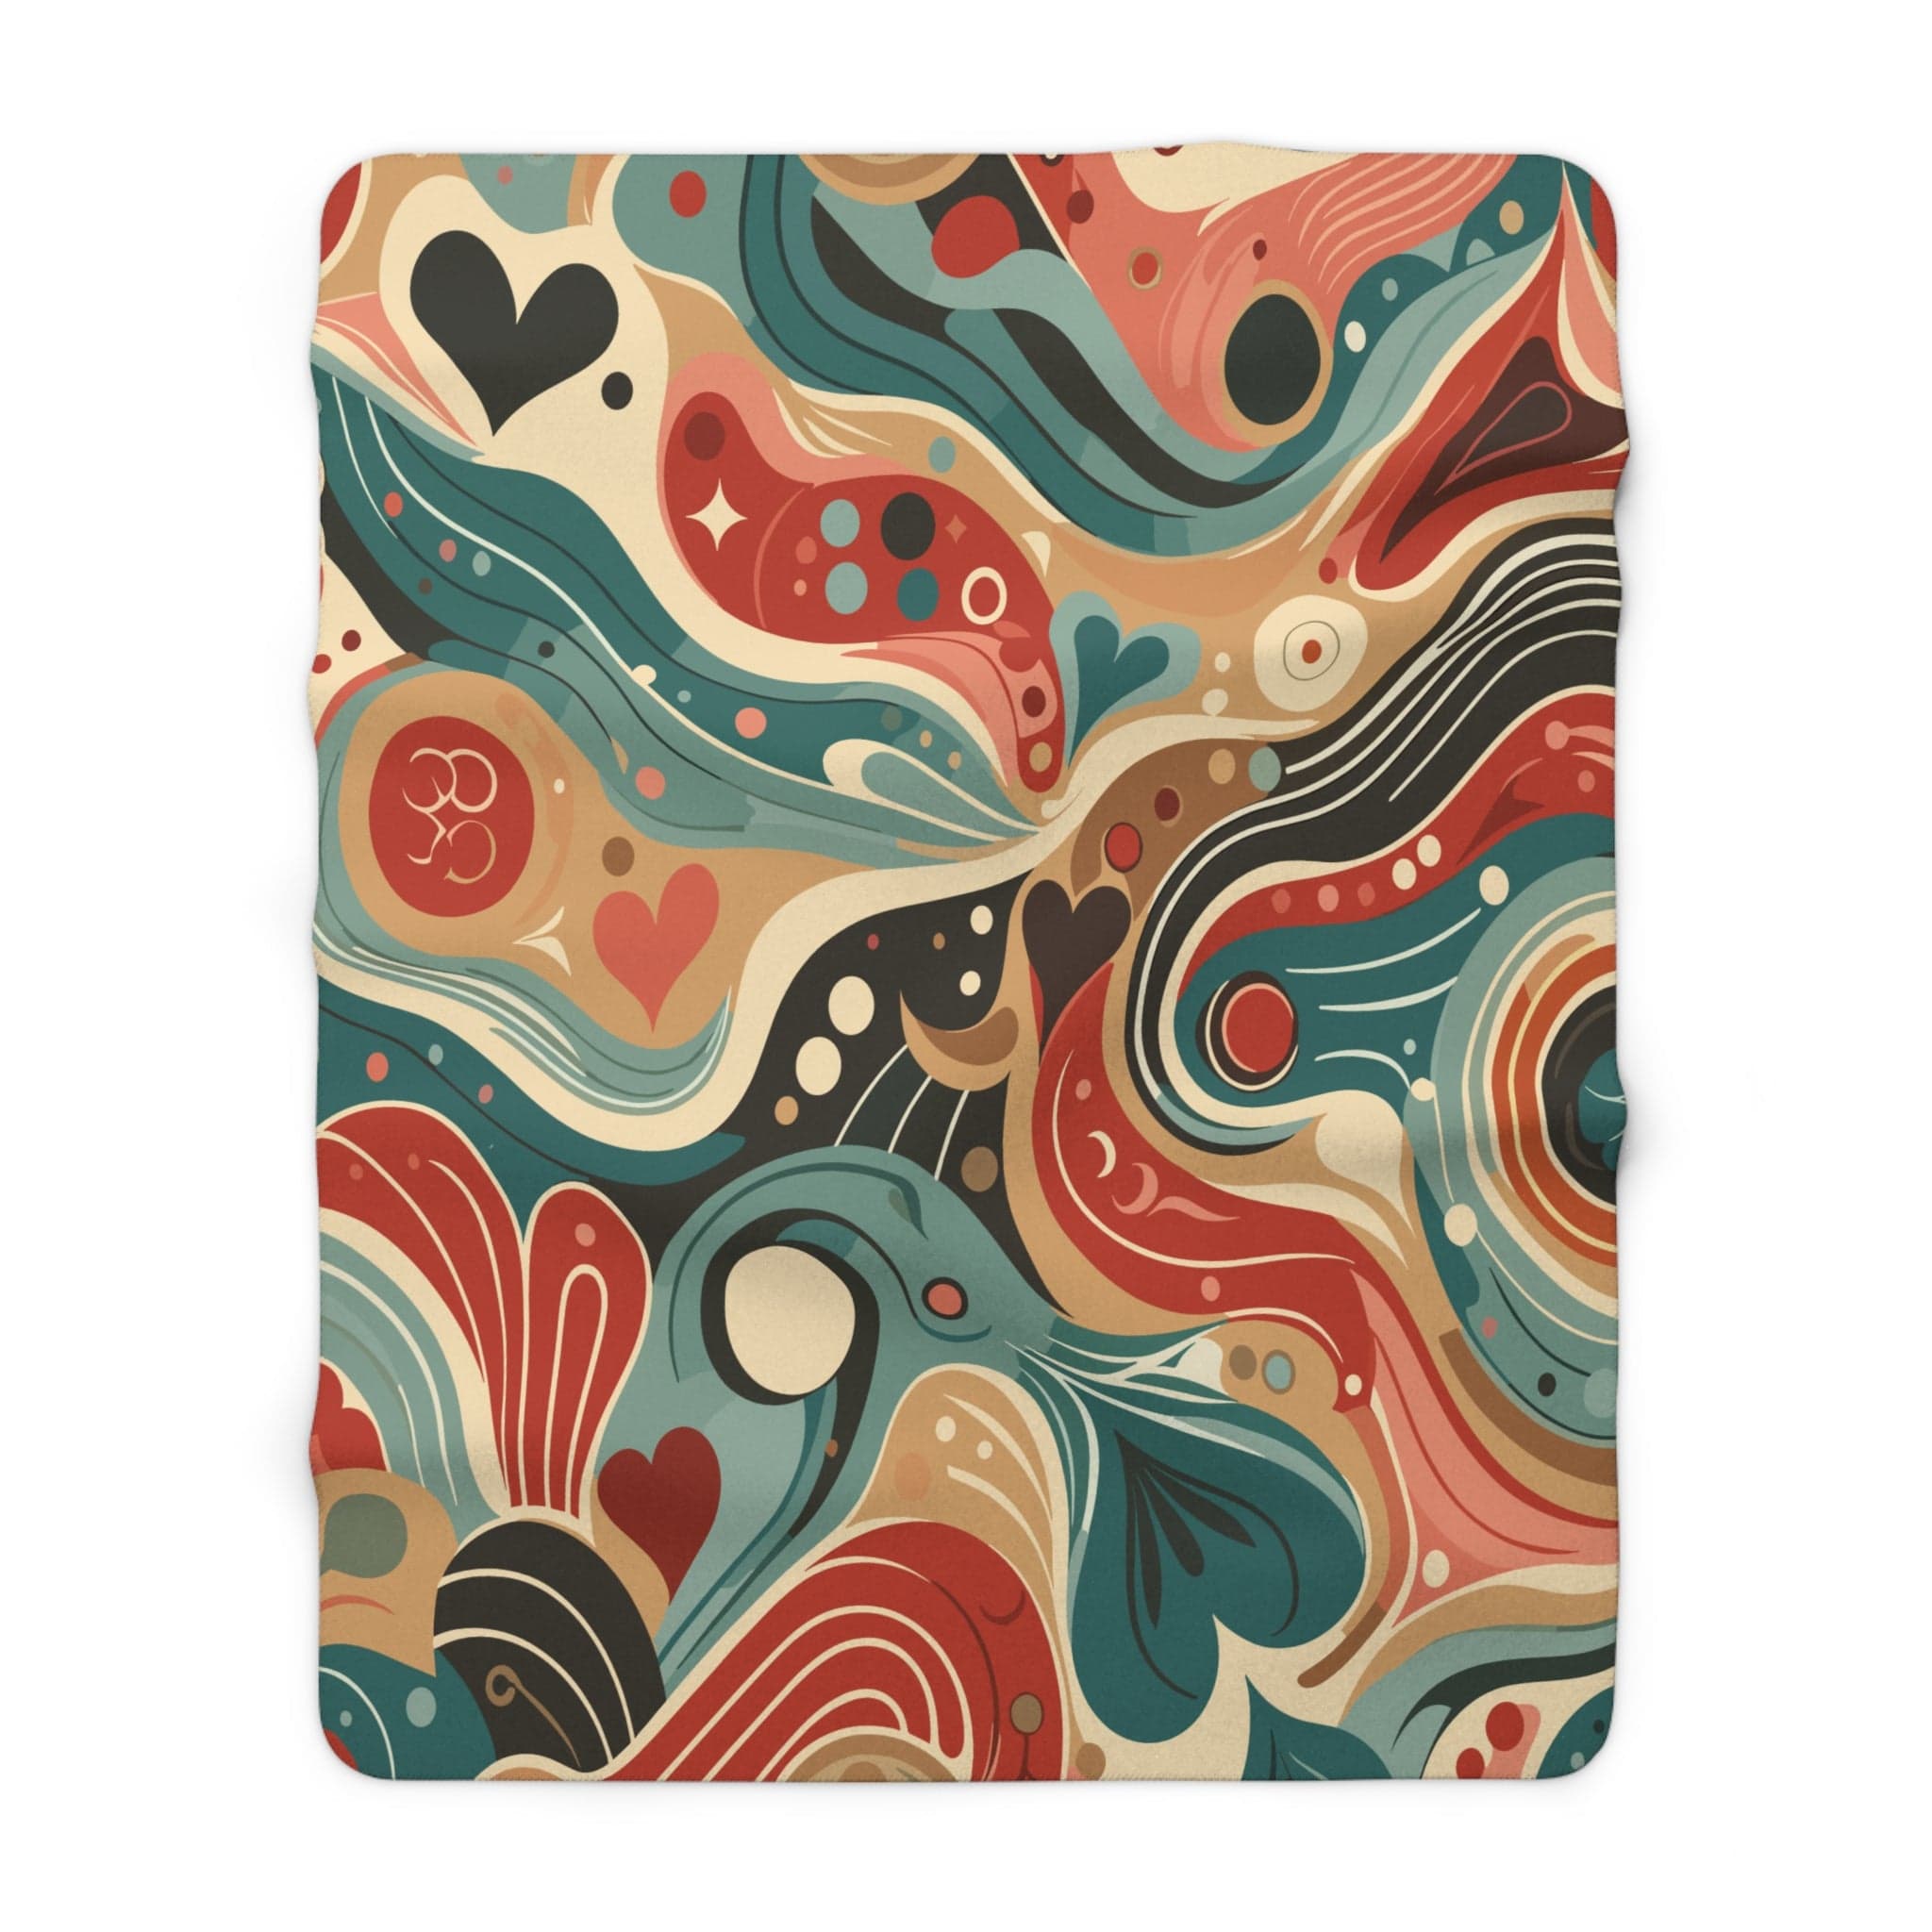 Kate McEnroe New York Retro Swirls Sherpa Fleece Blanket, Mid Century Modern Wavy Throw, Vibrant Abstract Design BlanketBlankets76856655835796361381